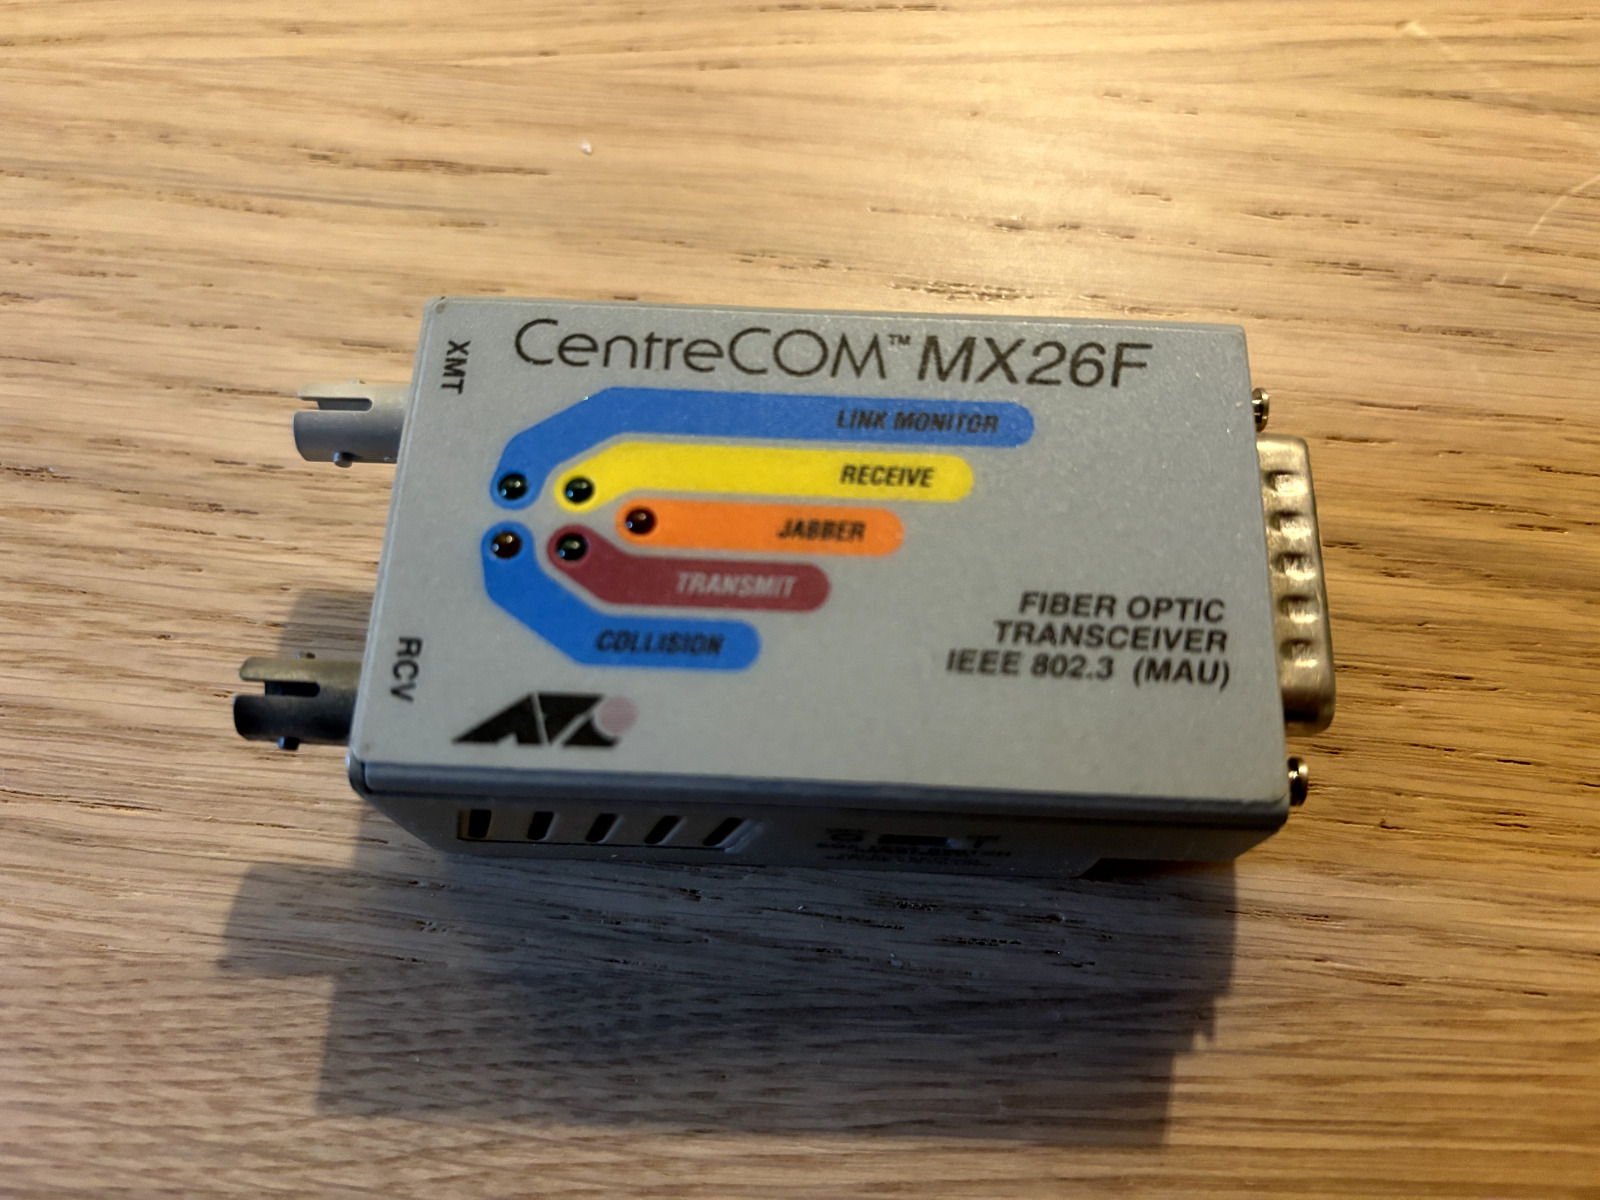 Allied Telesyn Telesis Centrecom Mx26F Micro Fiber Optic Transceiver IEEE 802.3